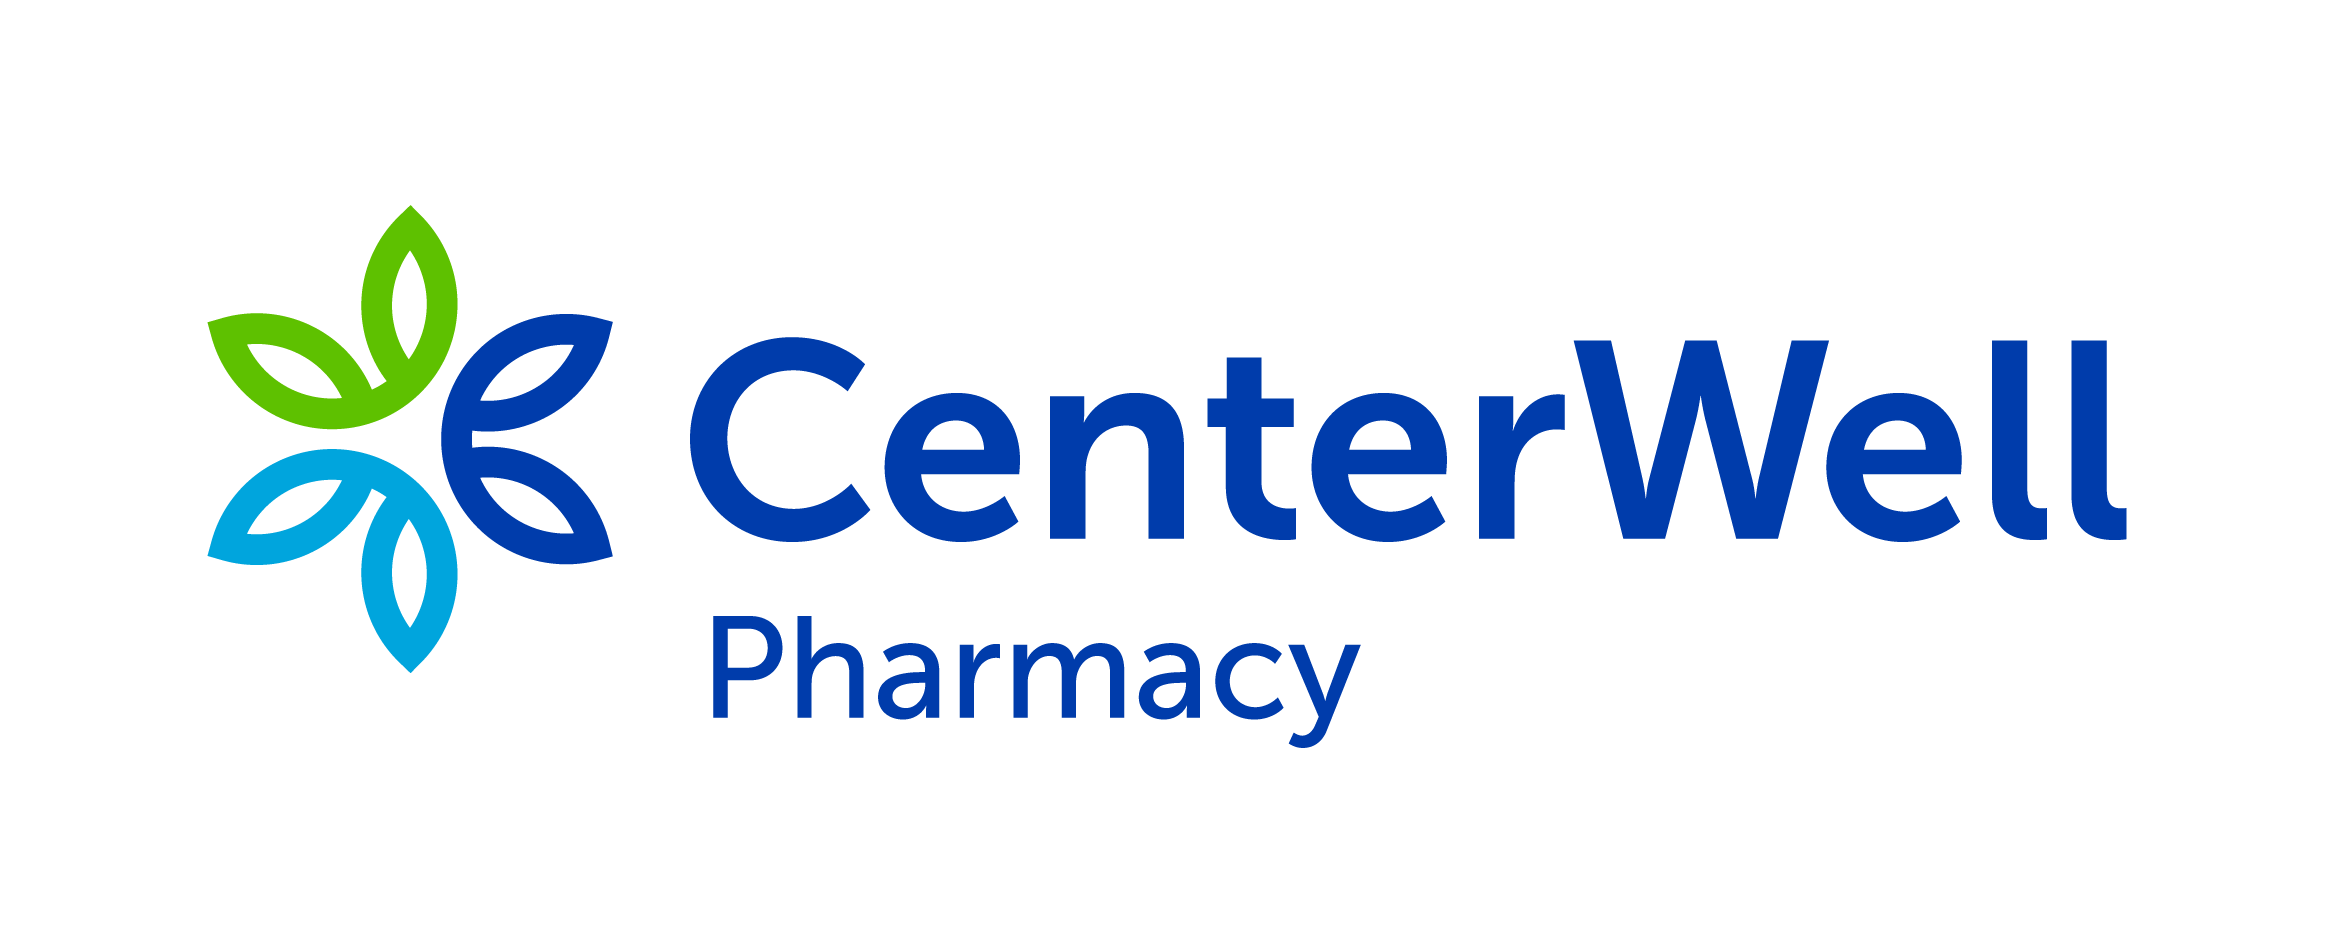 CenterWell Pharmacy logo